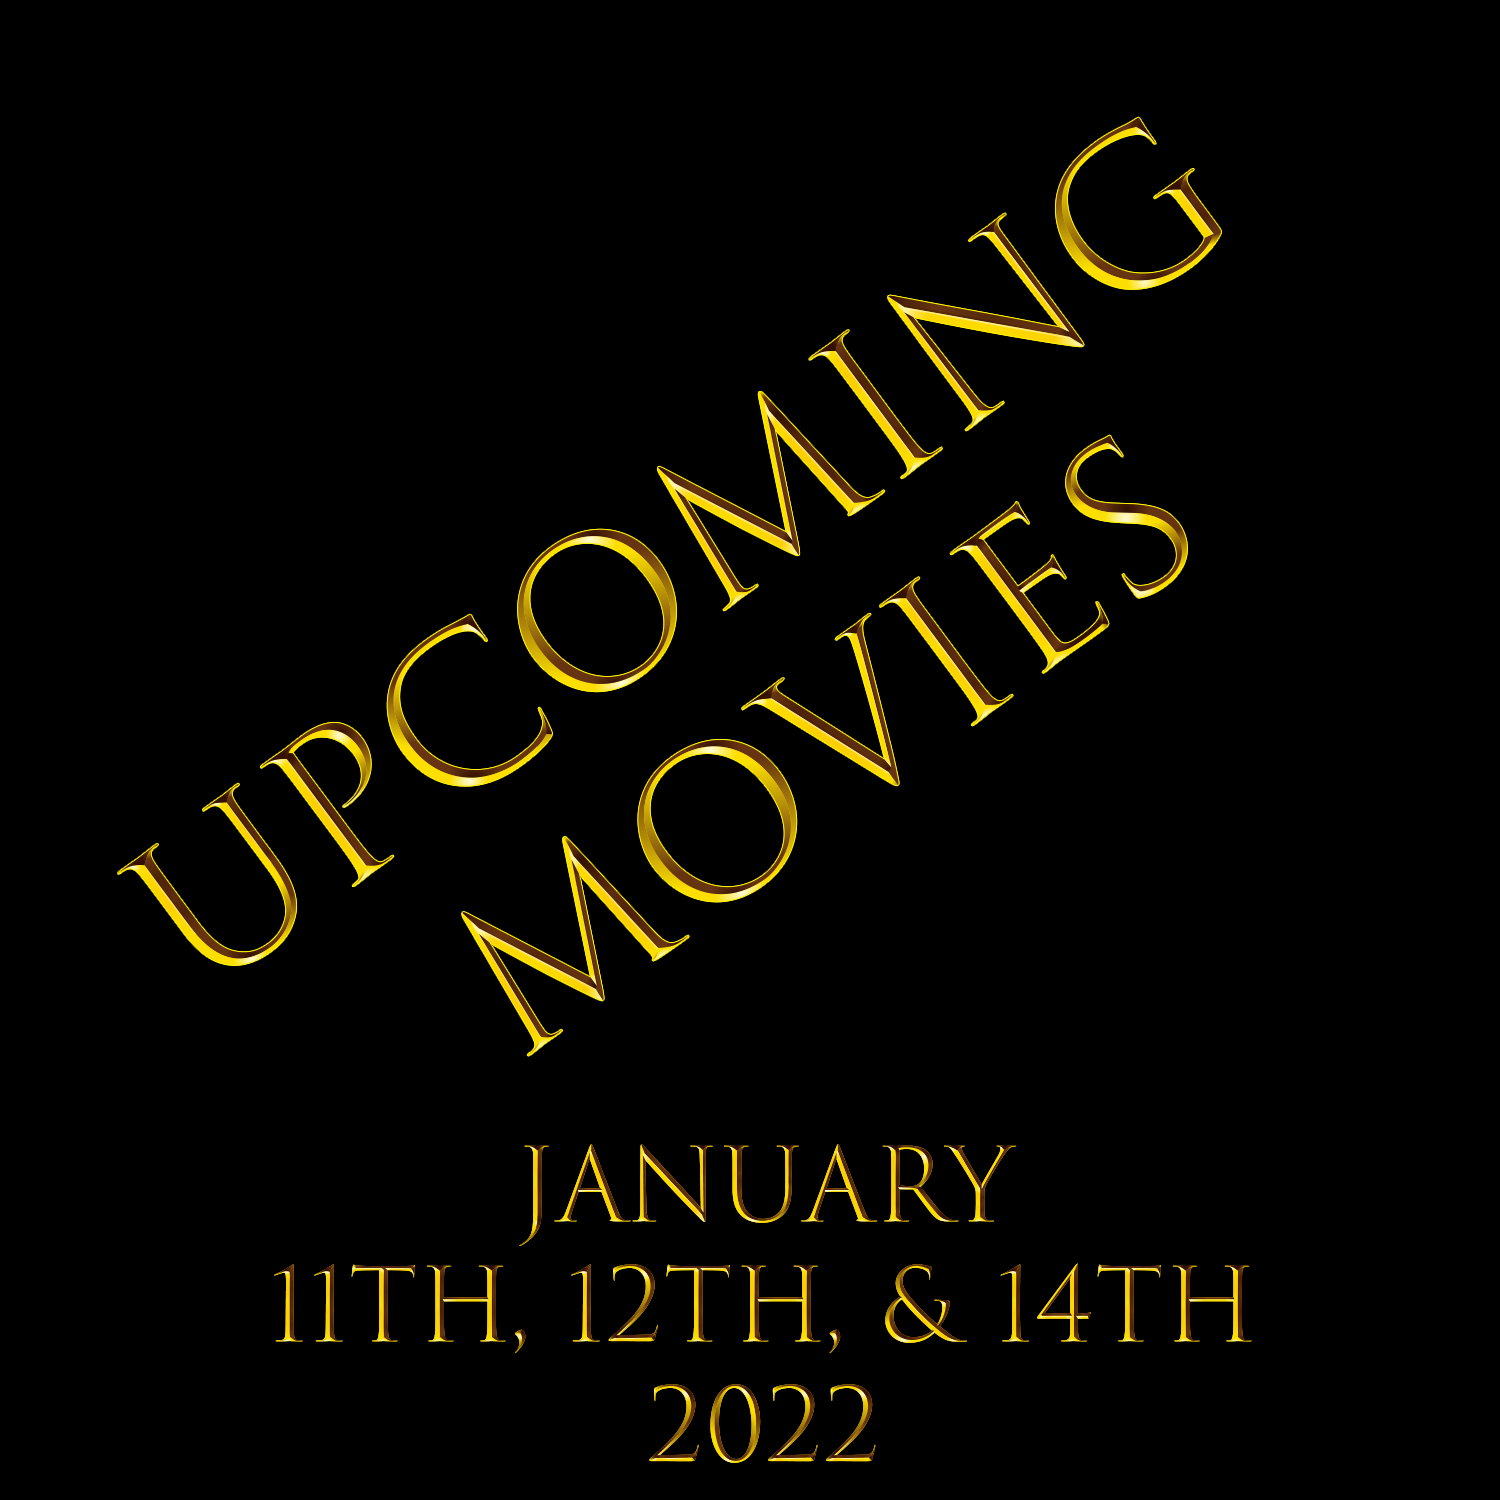 Upcoming Movies - January 13th, 2022